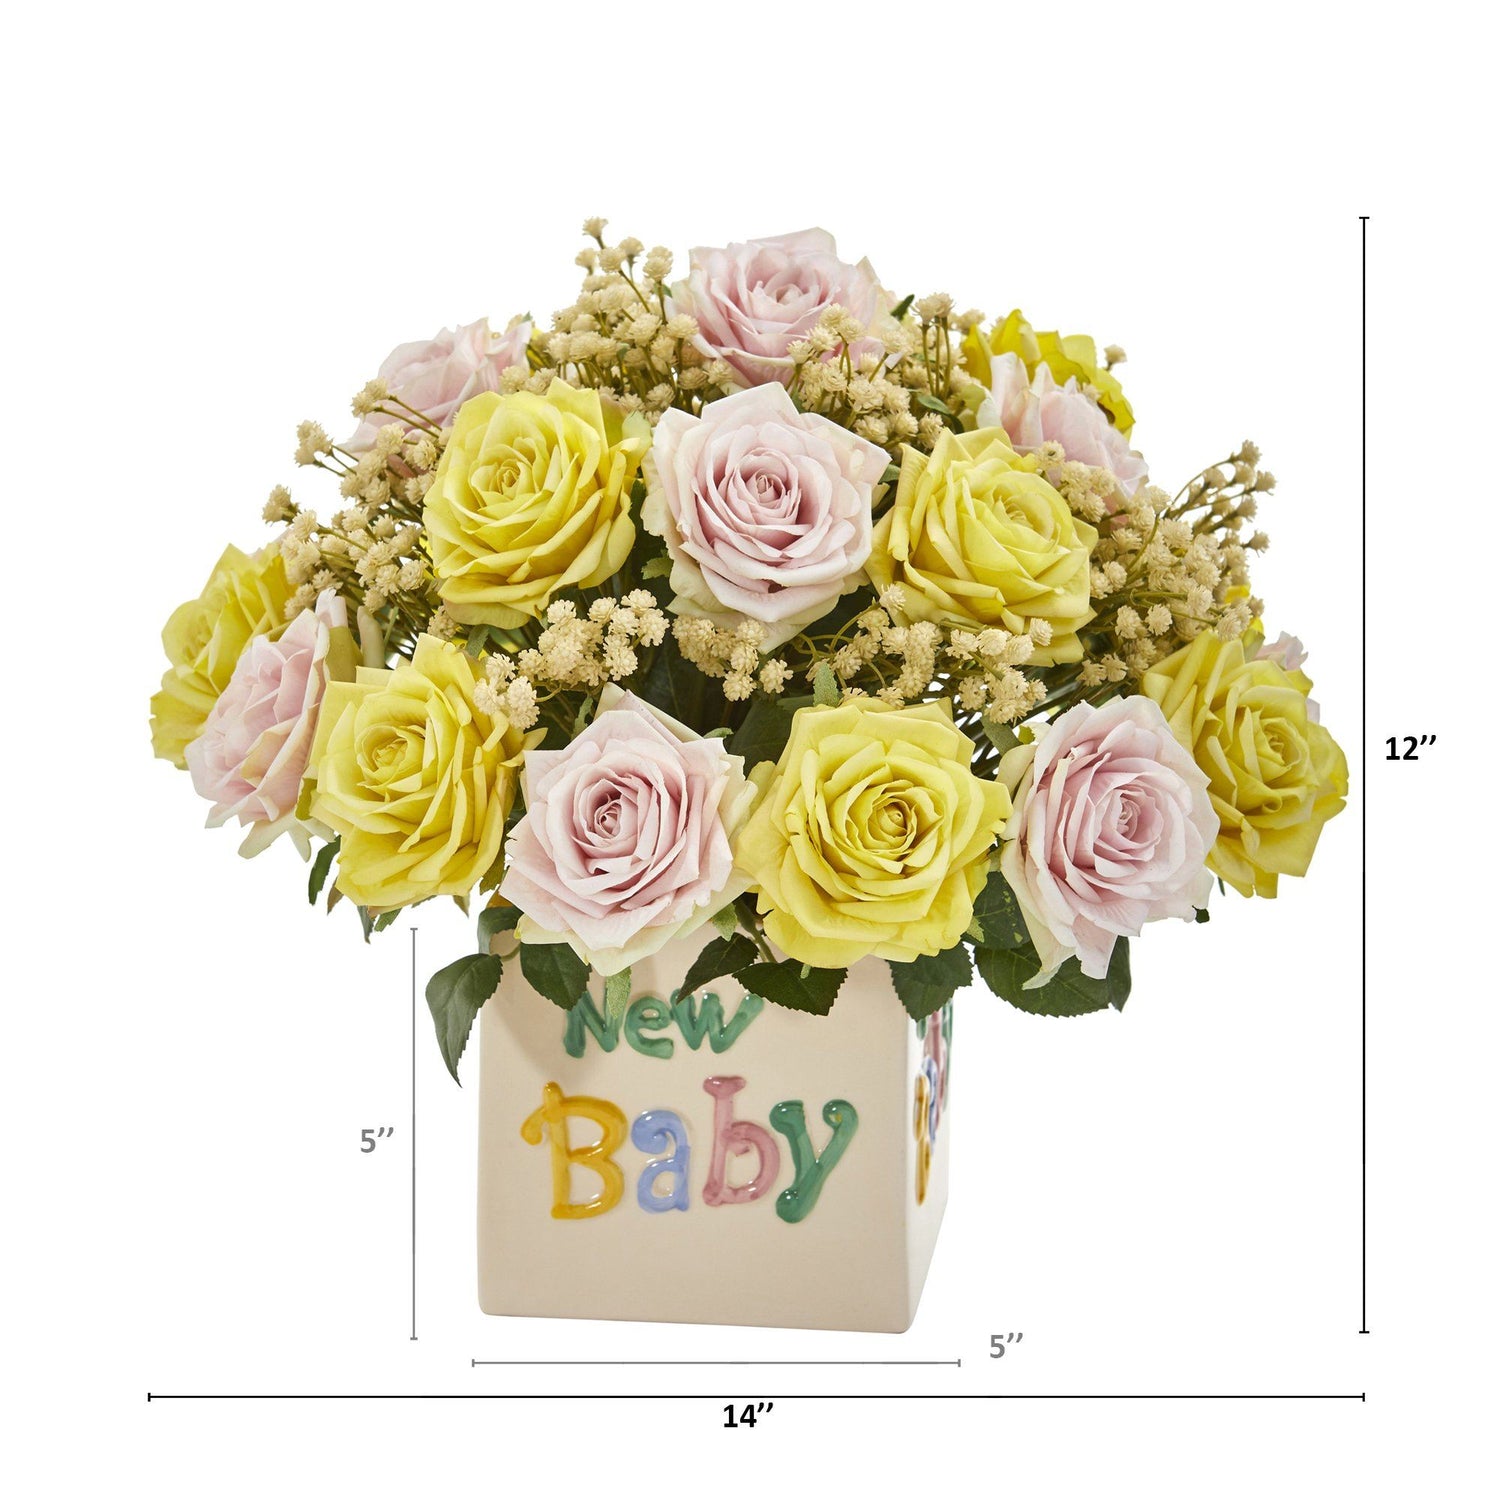 14” Rose and Gypsophillia Artificial Arrangement in “New Baby” Vase